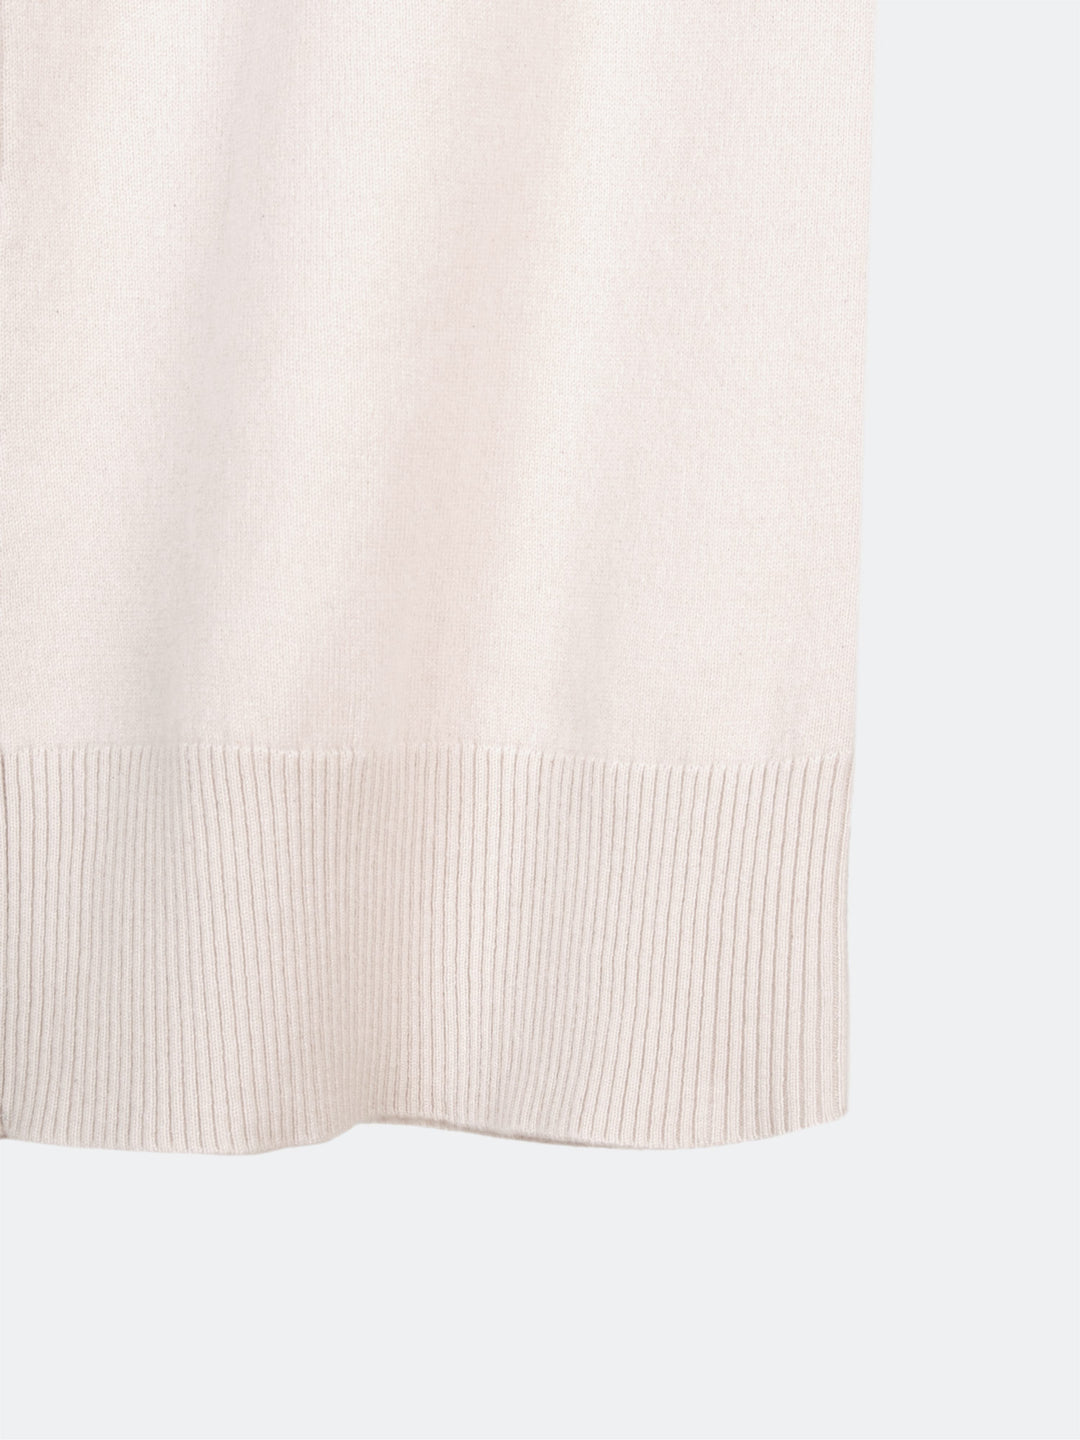 Cashmere pants "Lux Pants" in 100% pure cashmere. Color: Pearl. Scandinavian design by Kashmina.